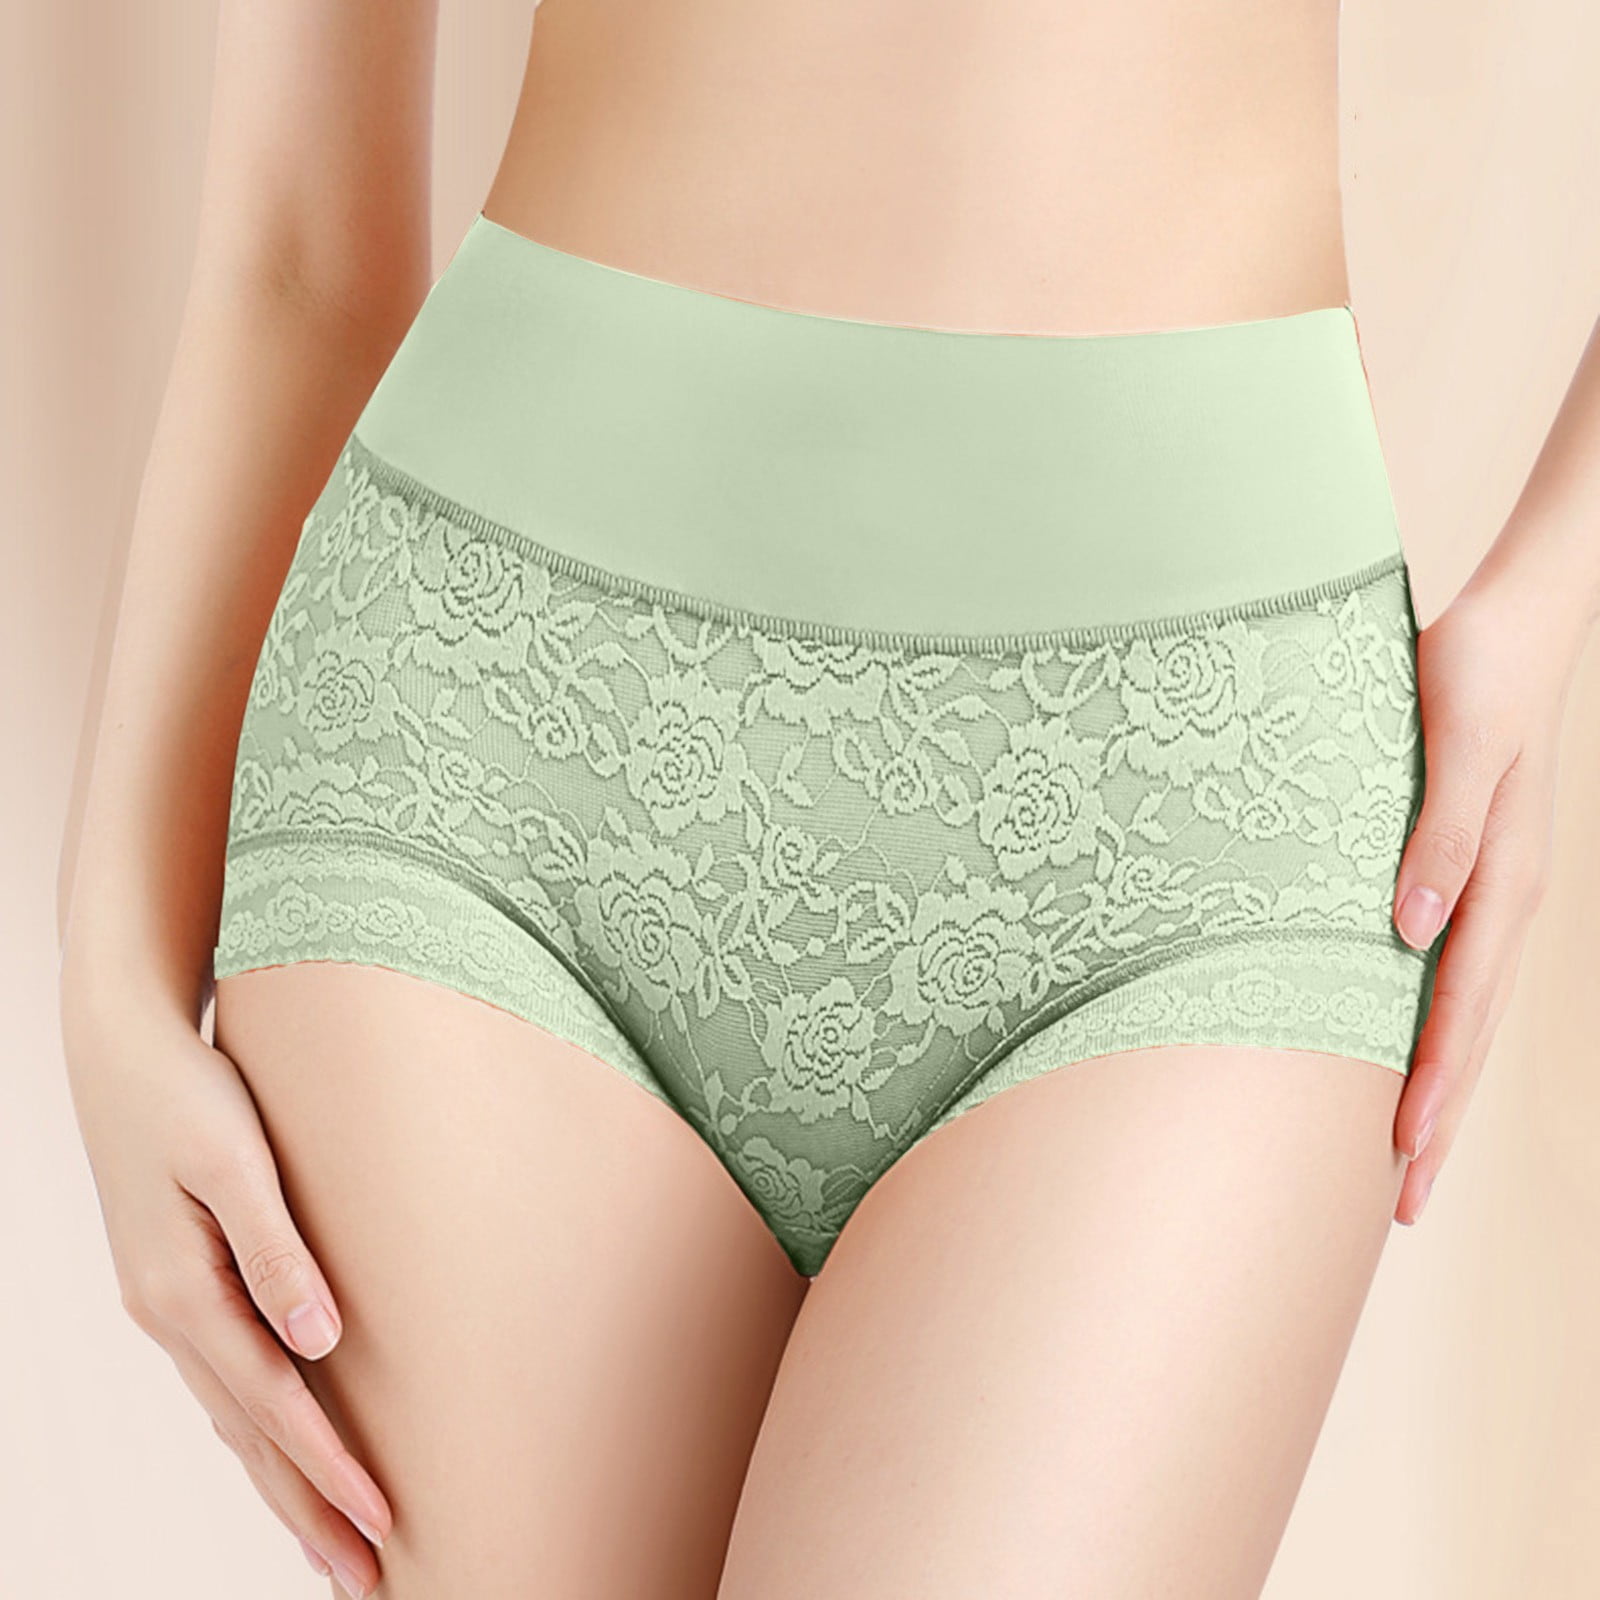 PMUYBHF Tummy Control Underwear Seamless Cotton Womens High Waisted Lace  Body Fitting Underwear Comfortable Large Underwear 6.99 